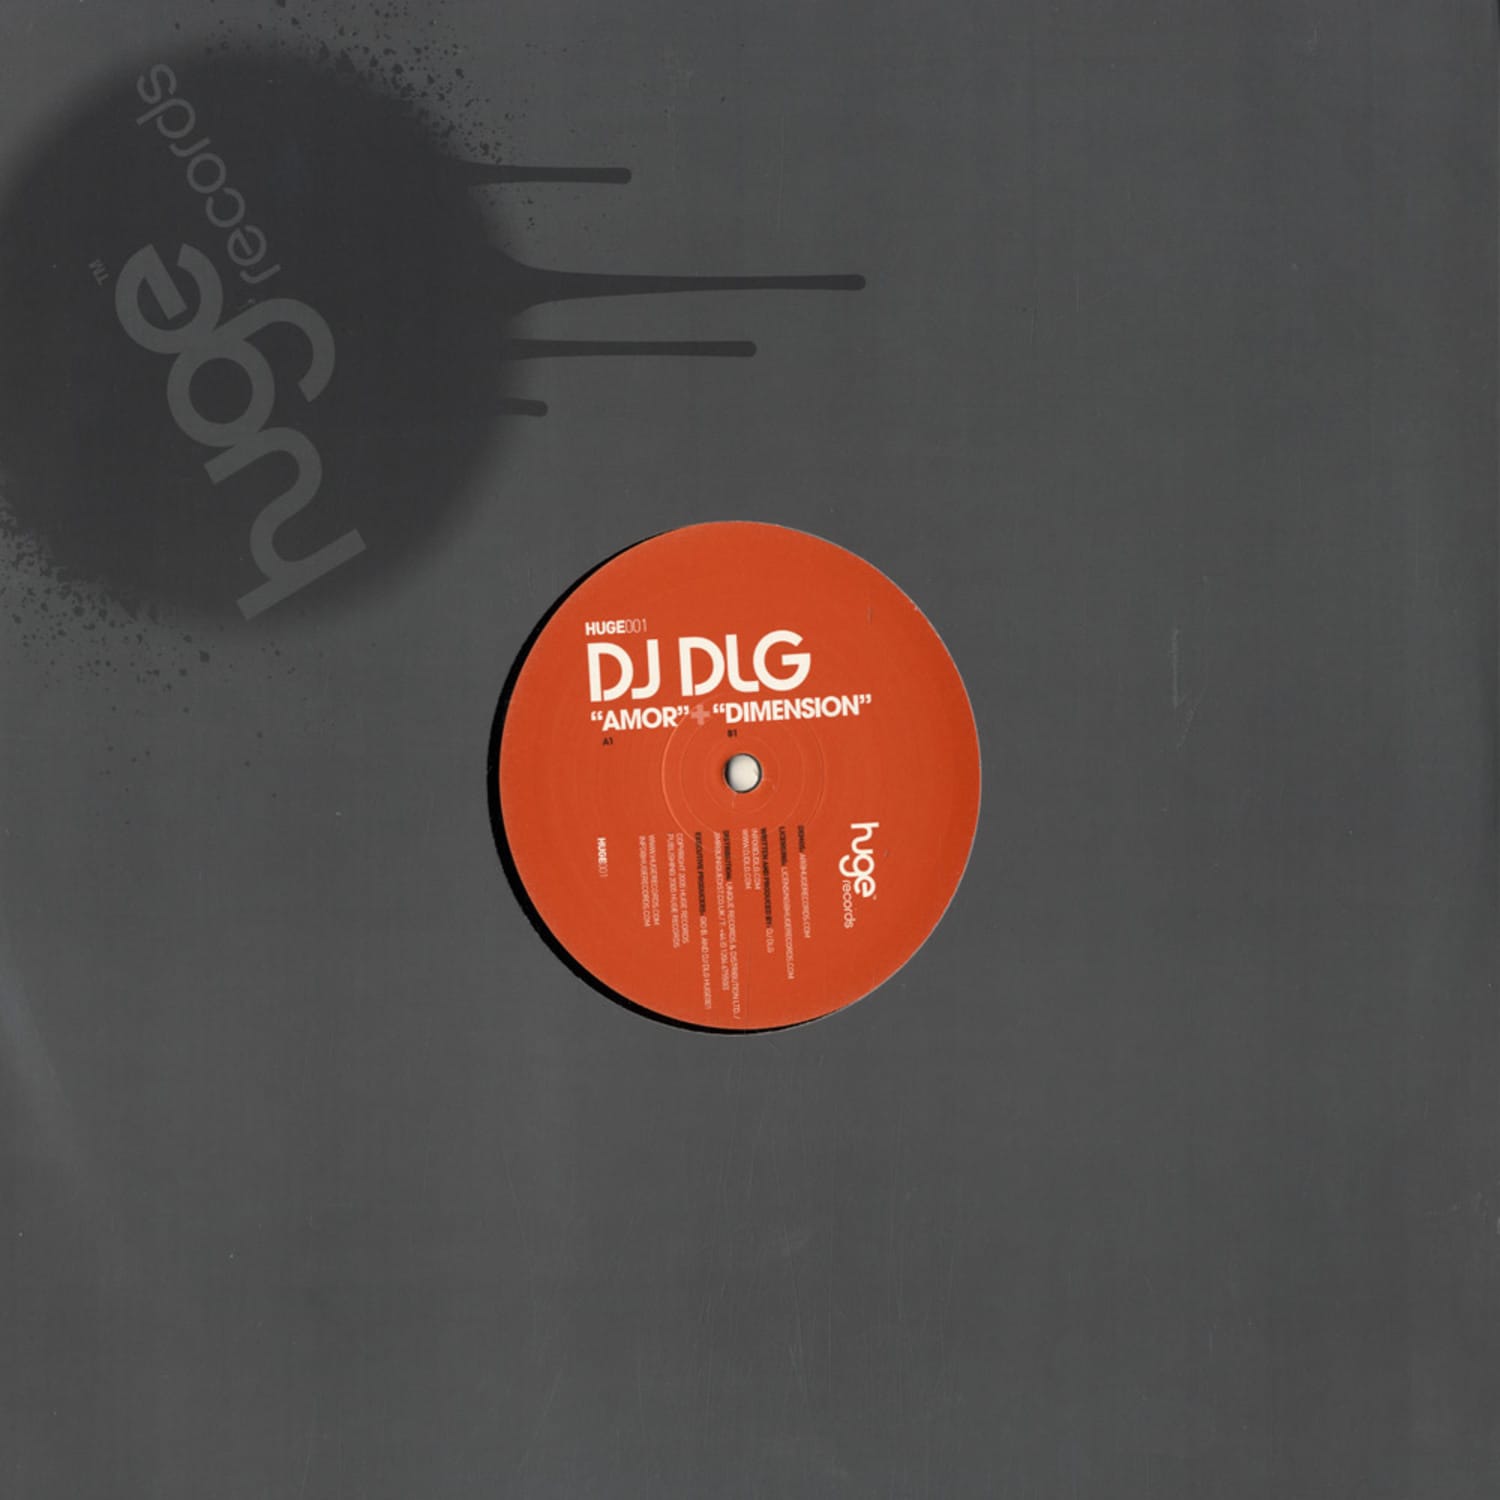 DJ DLG - AMOR / DIMENSION